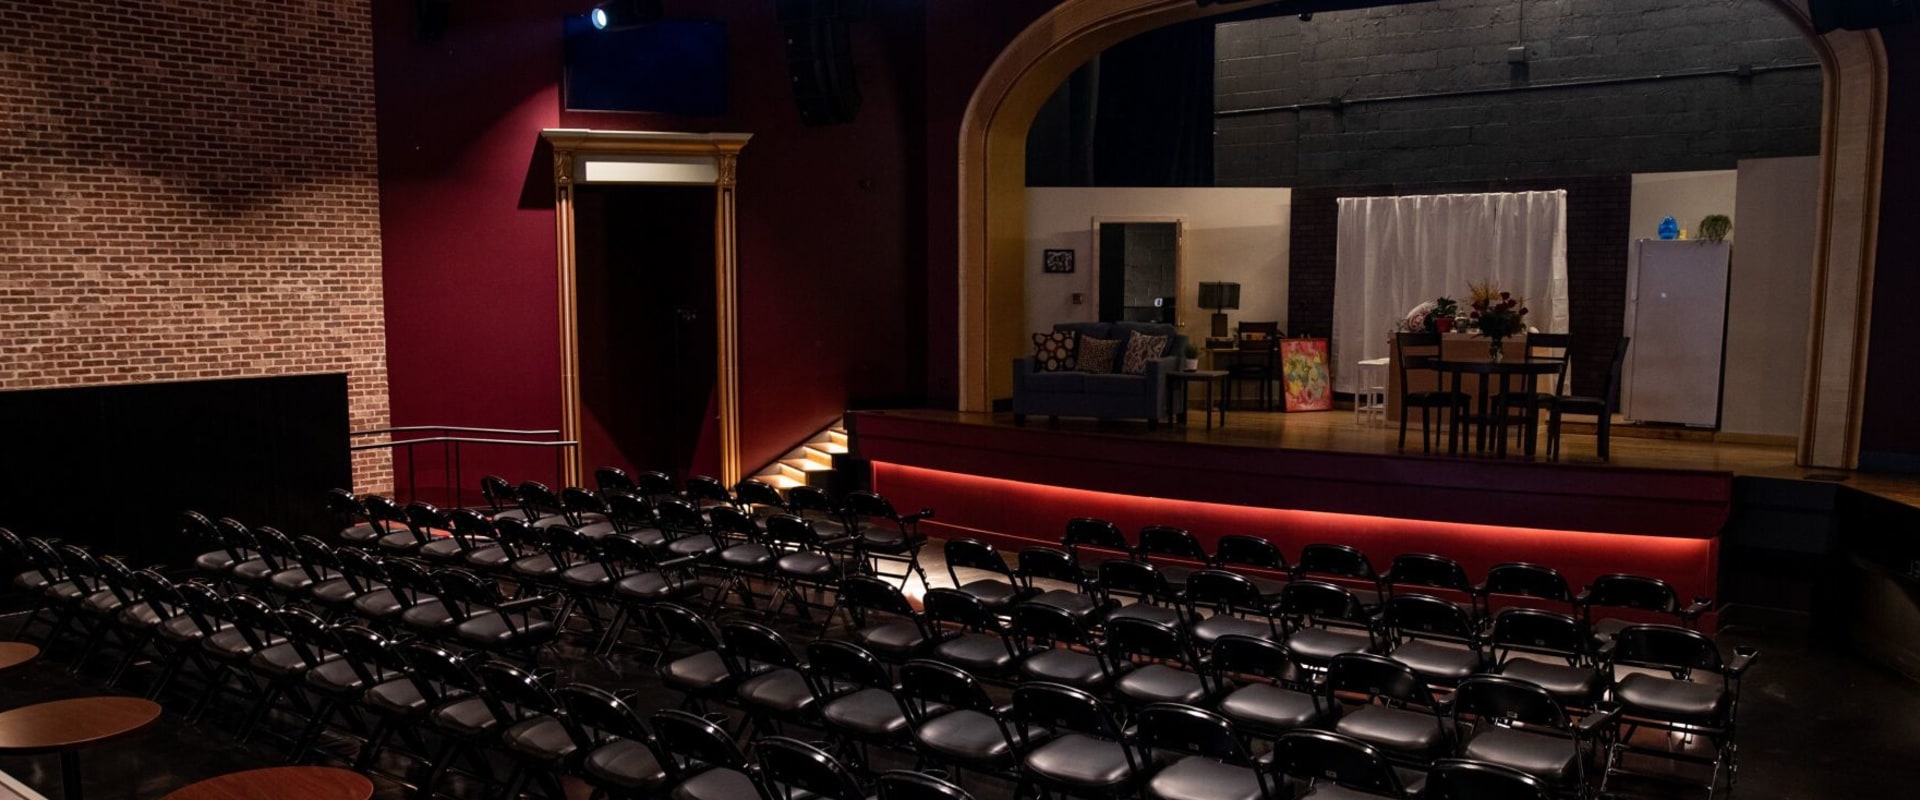 The Rich History of Theatres in Douglas County, NE